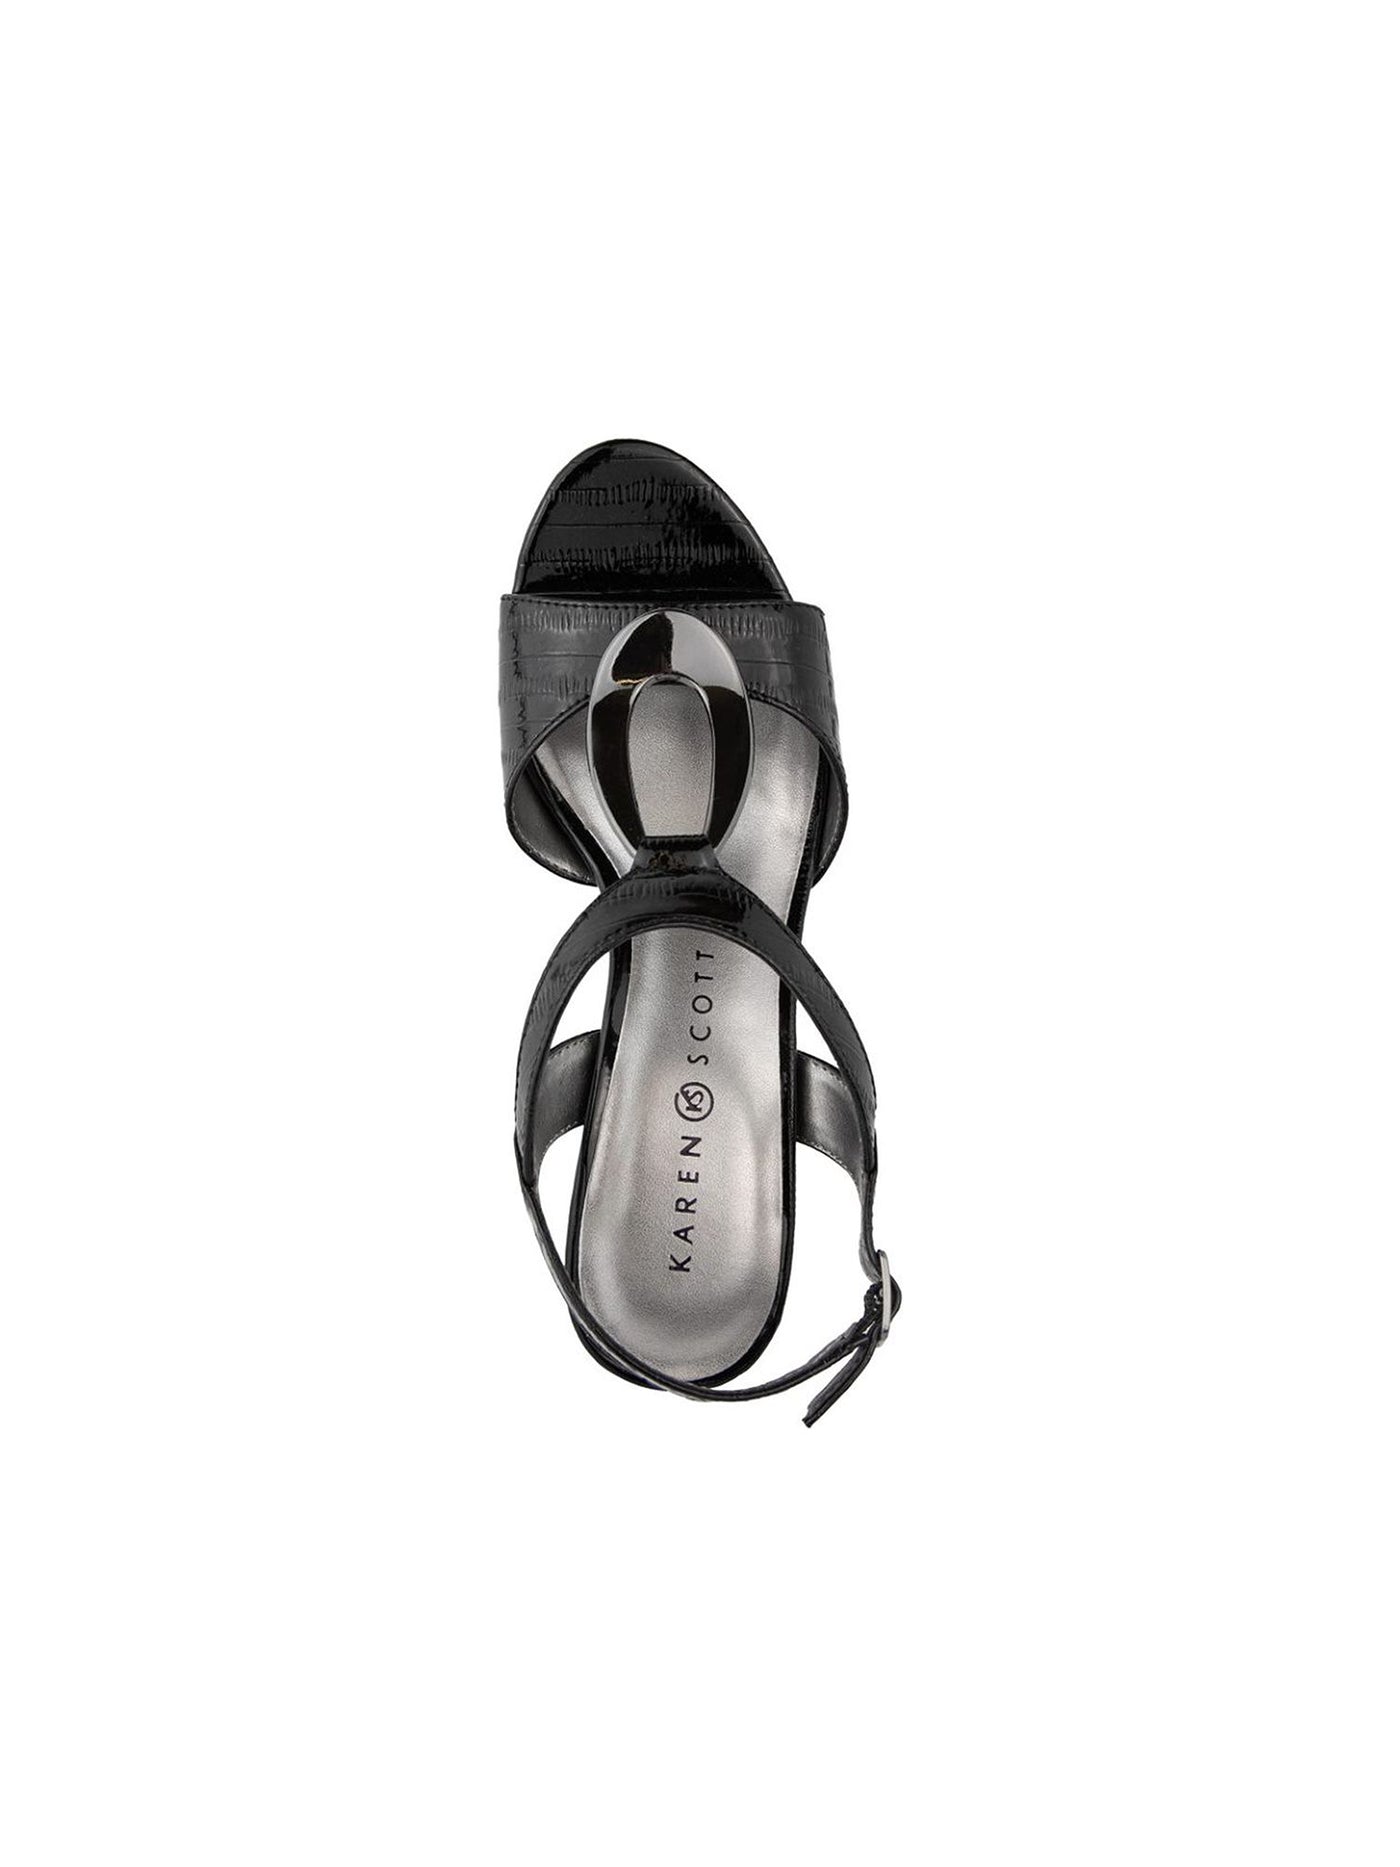 KAREN SCOTT Womens Black Patterned Hardware Detail Padded Adjustable Strap T-Strap Danee Almond Toe Block Heel Buckle Dress Sandals Shoes 7 M